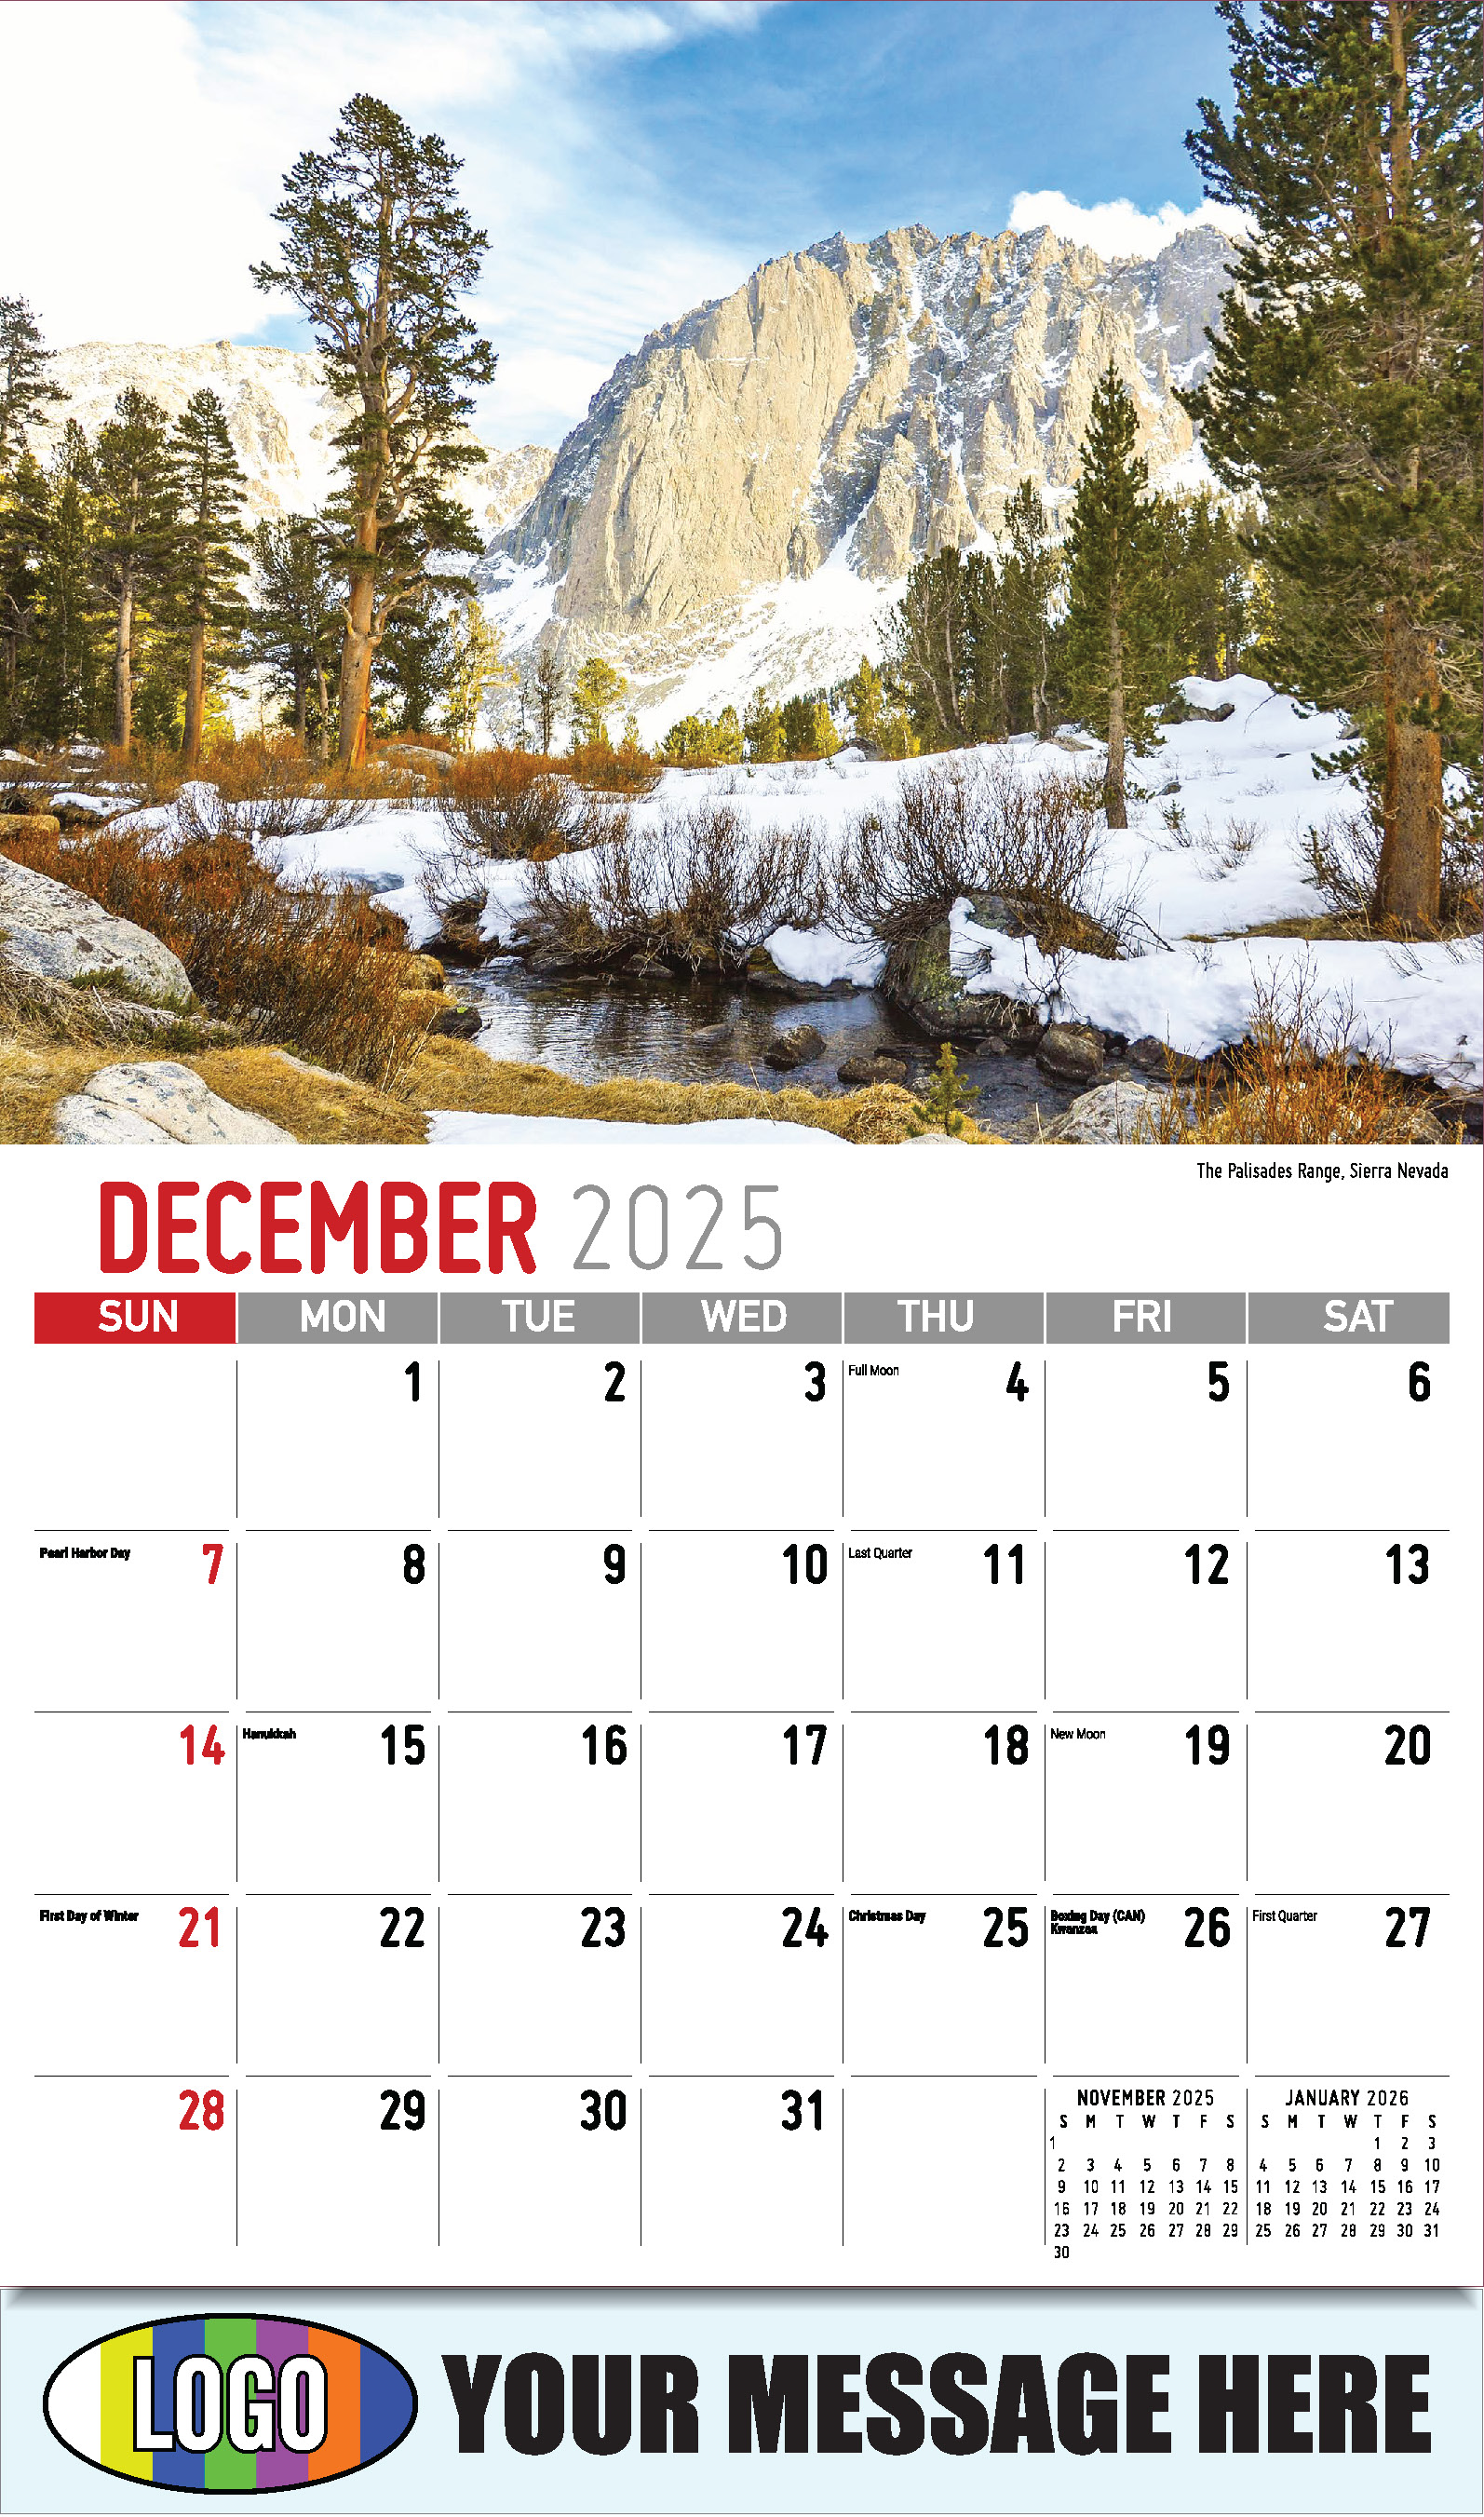 Scenes of California 2025 Business Advertising Wall Calendar - December